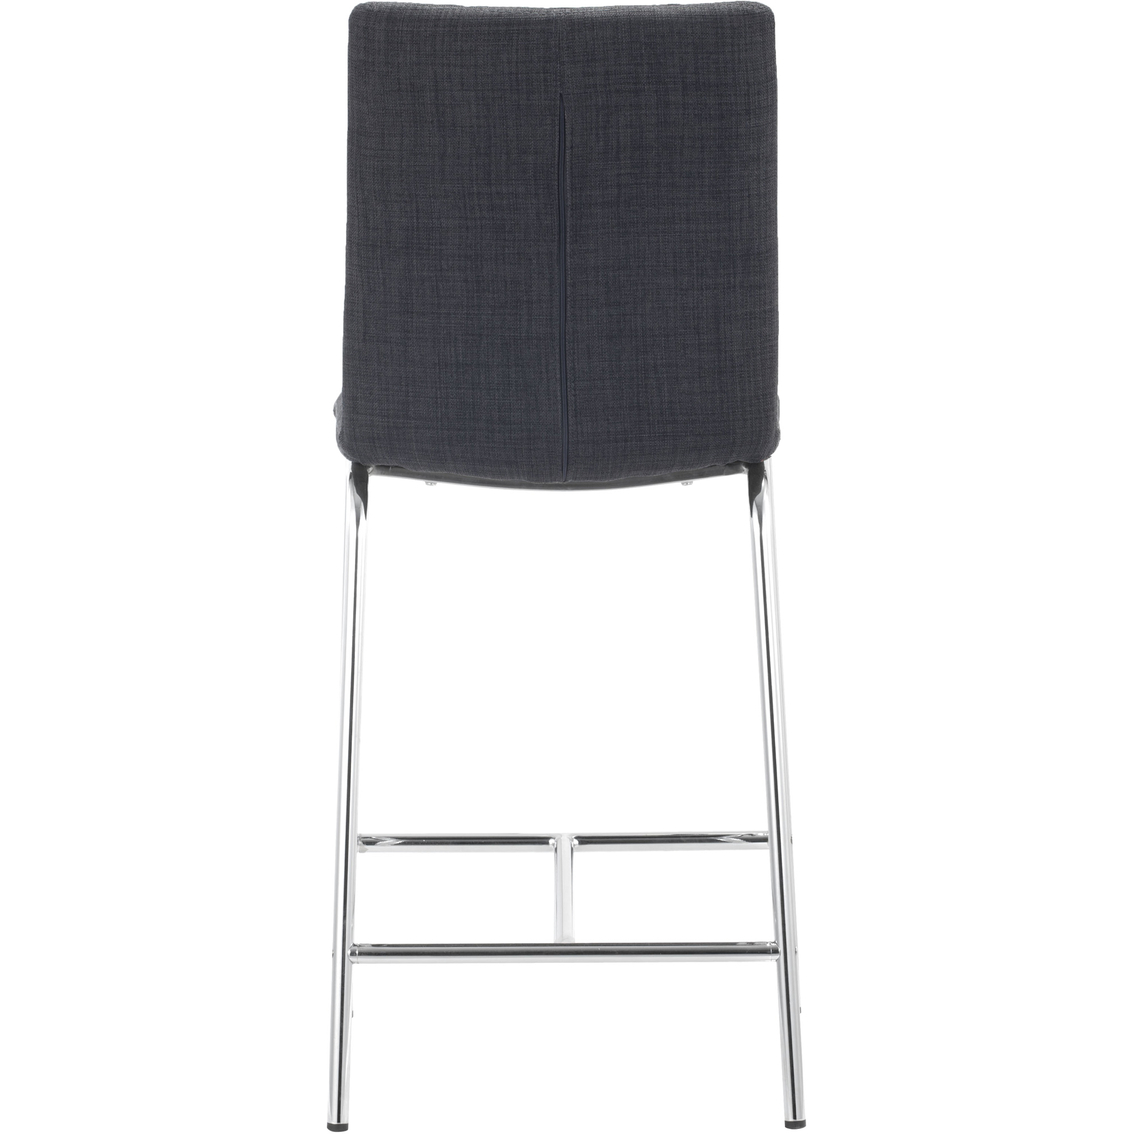 Zuo Modern Uppsala Counter Chair Graphite 2 Pk. - Image 4 of 8